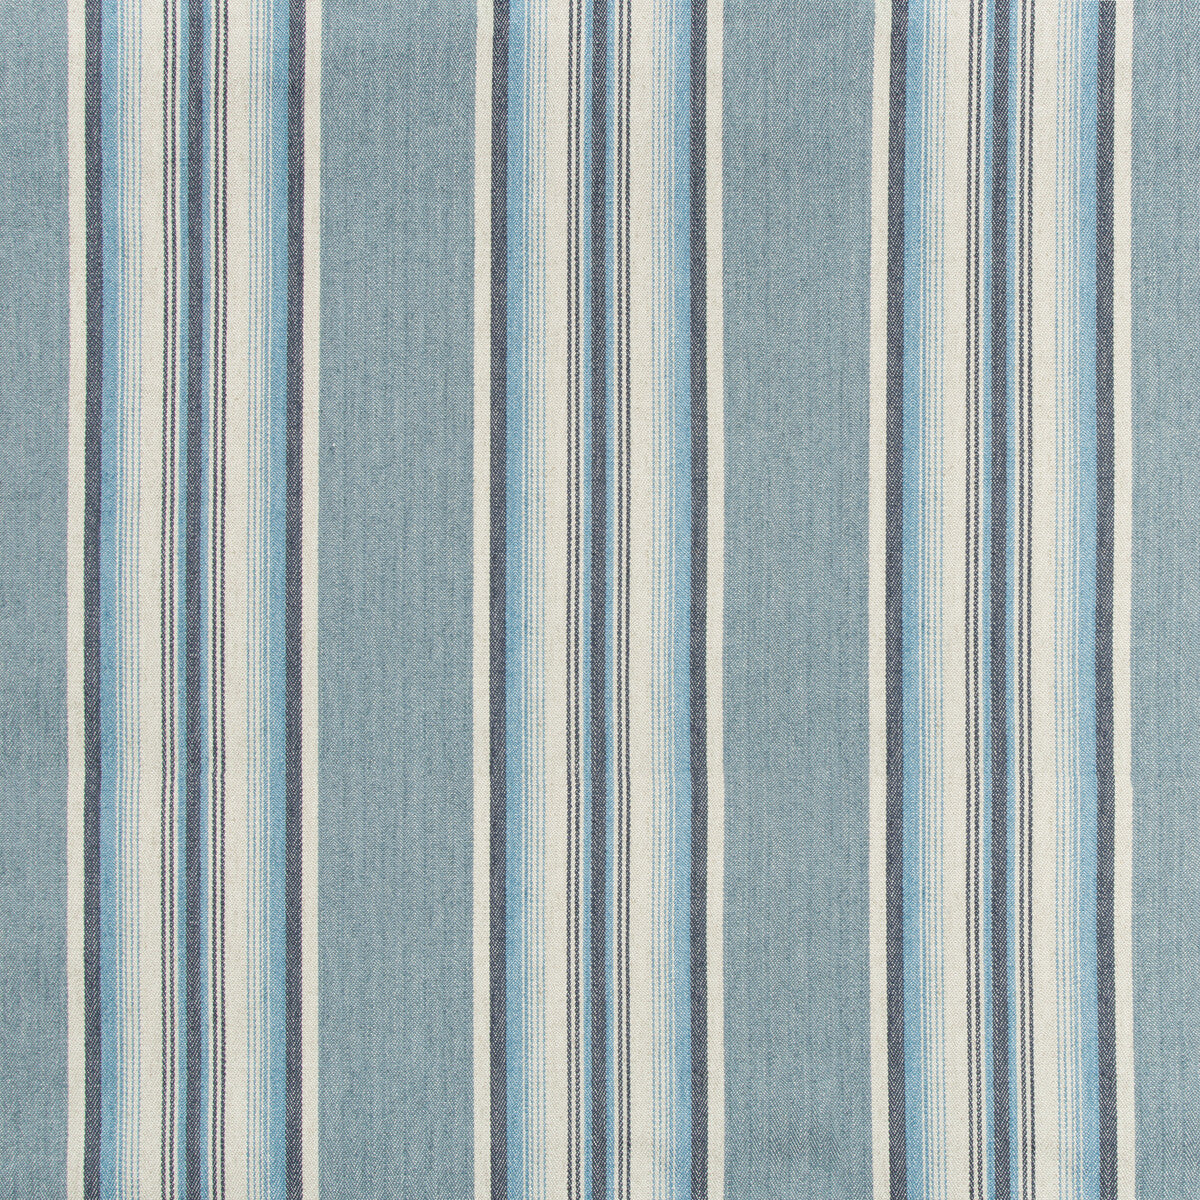 Lodeve Ticking fabric in cornflower color - pattern 35169.5.0 - by Kravet Design